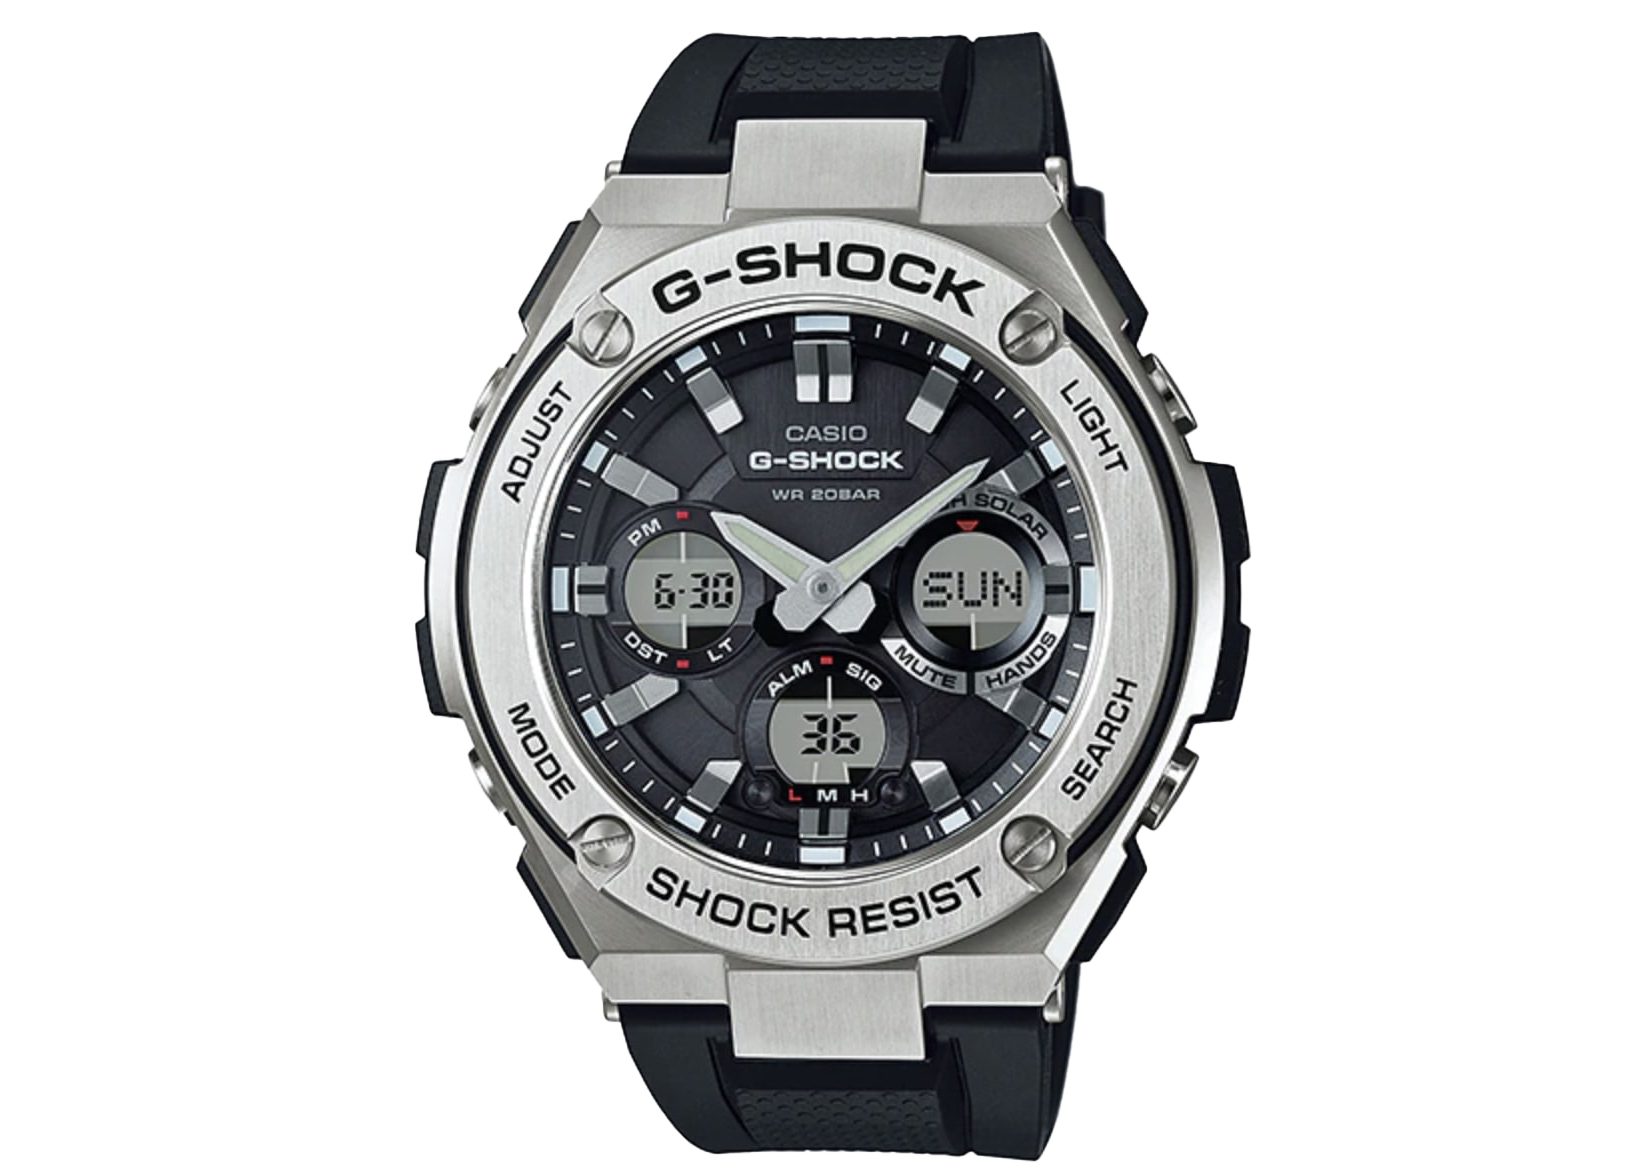 Casio G-Shock GST-S110-1A